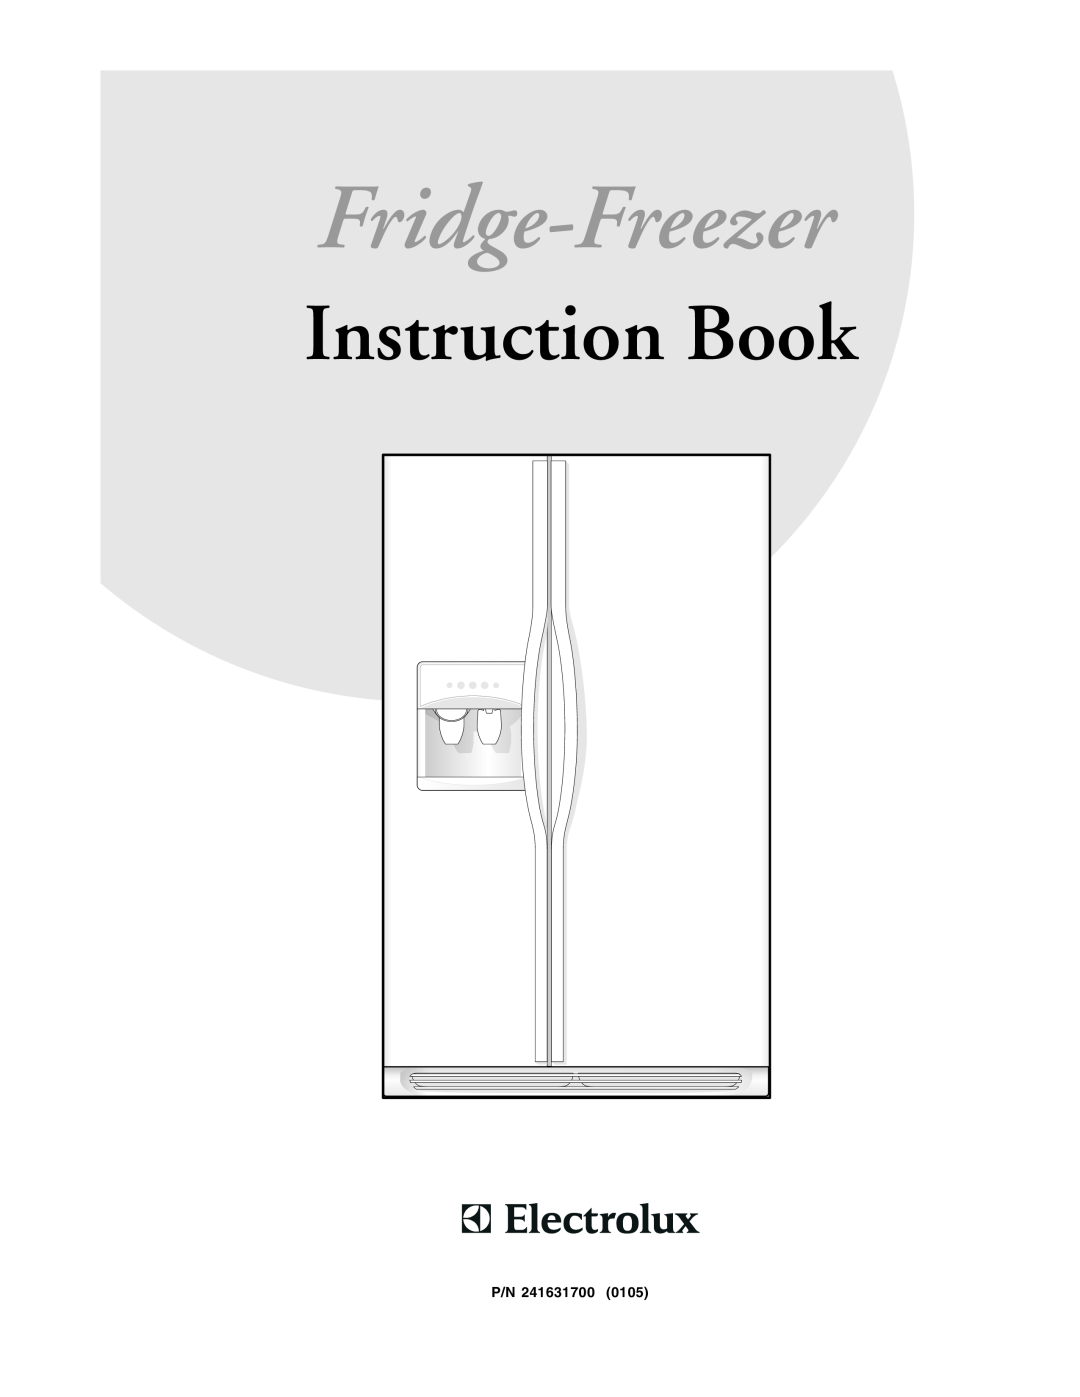 Electrolux U27107 manual Fridge-Freezer, Instruction Book 